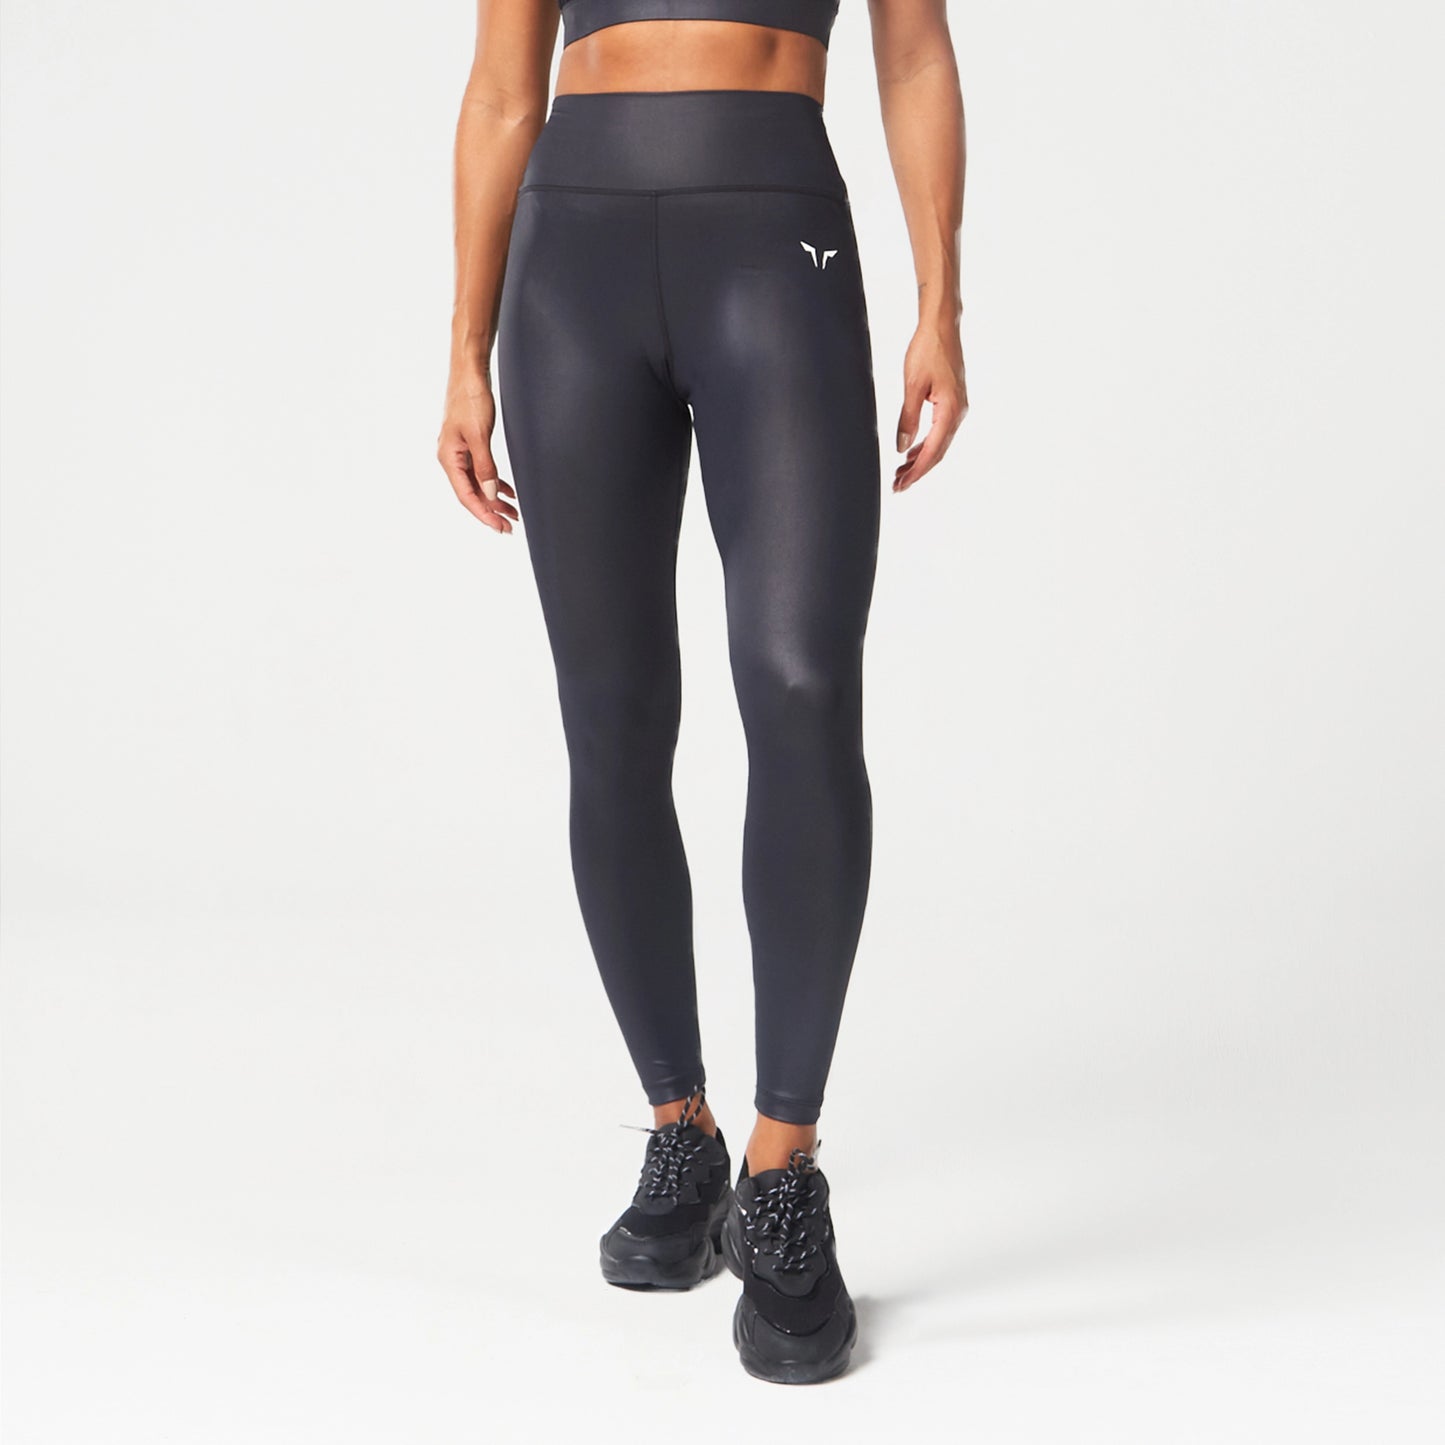 squatwolf-workout-clothes-glaze-leggings-black-gym-leggings-for-women